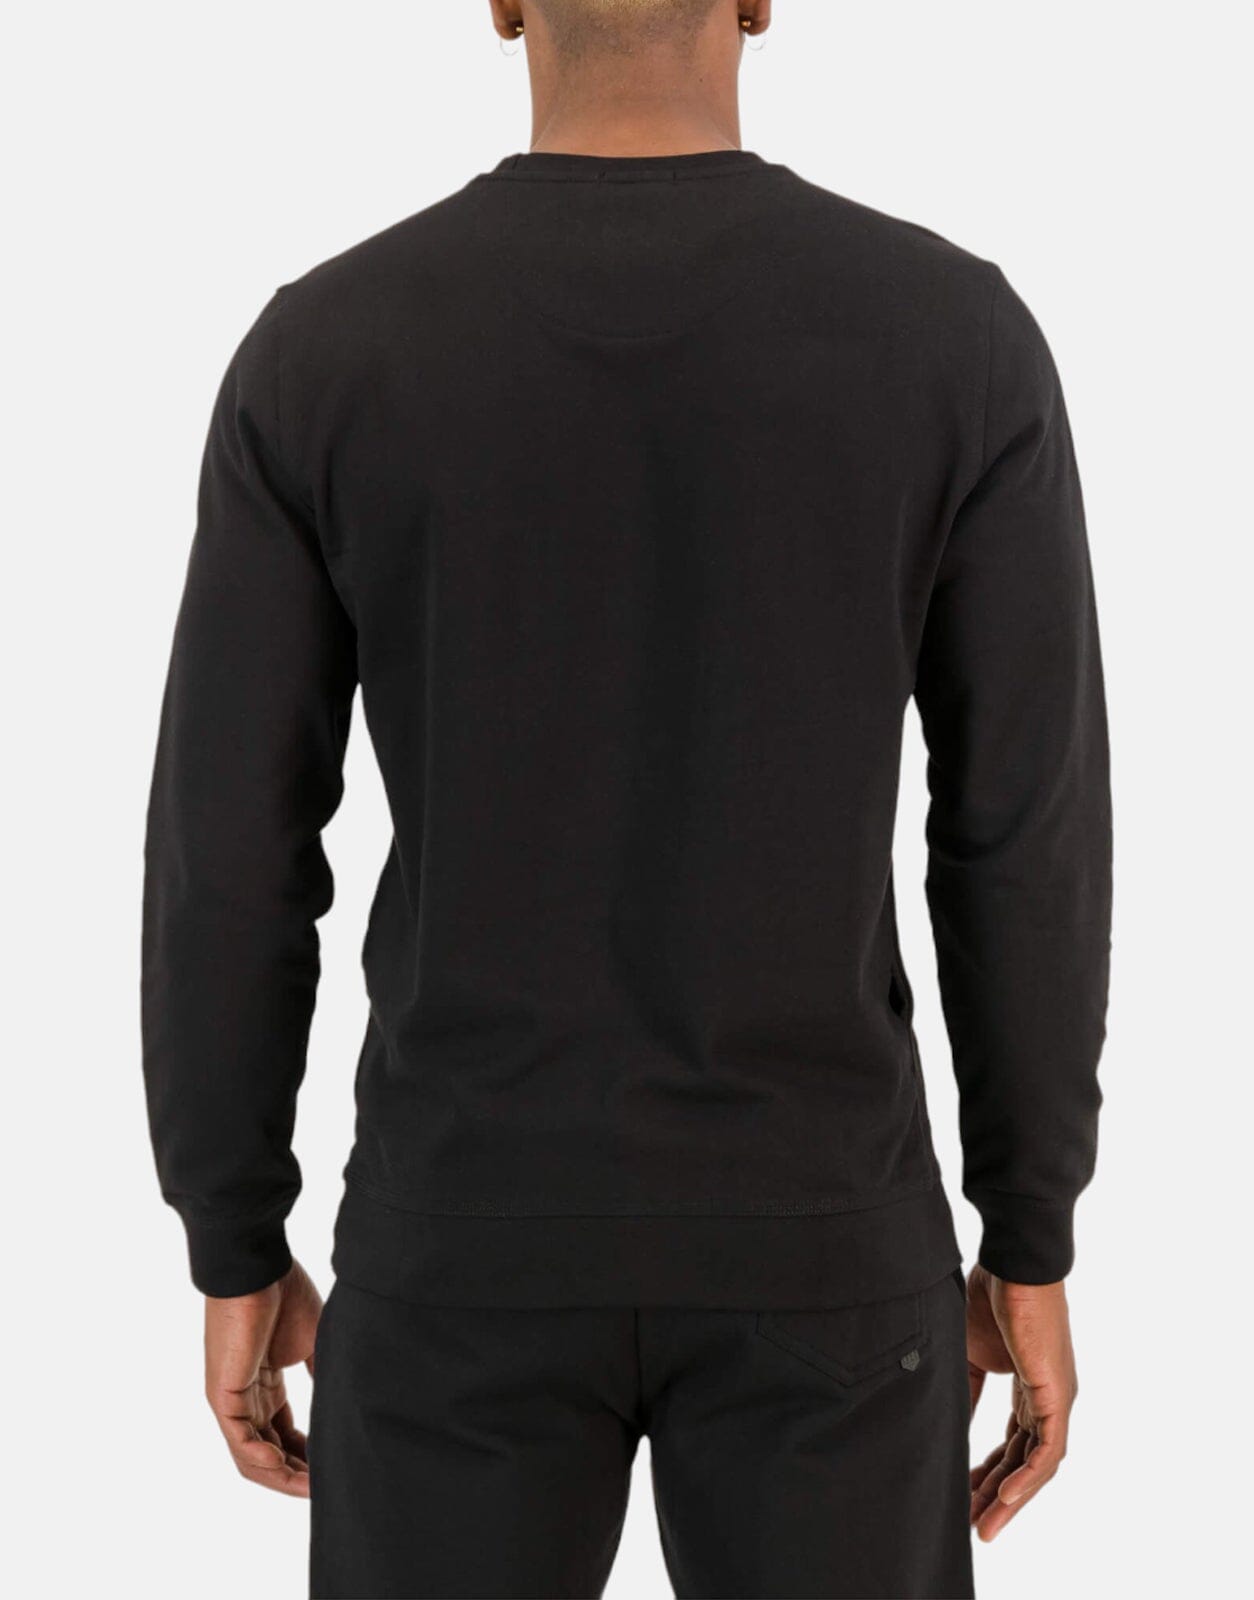 SPCC Vega Black Sweatshirt - Subwear